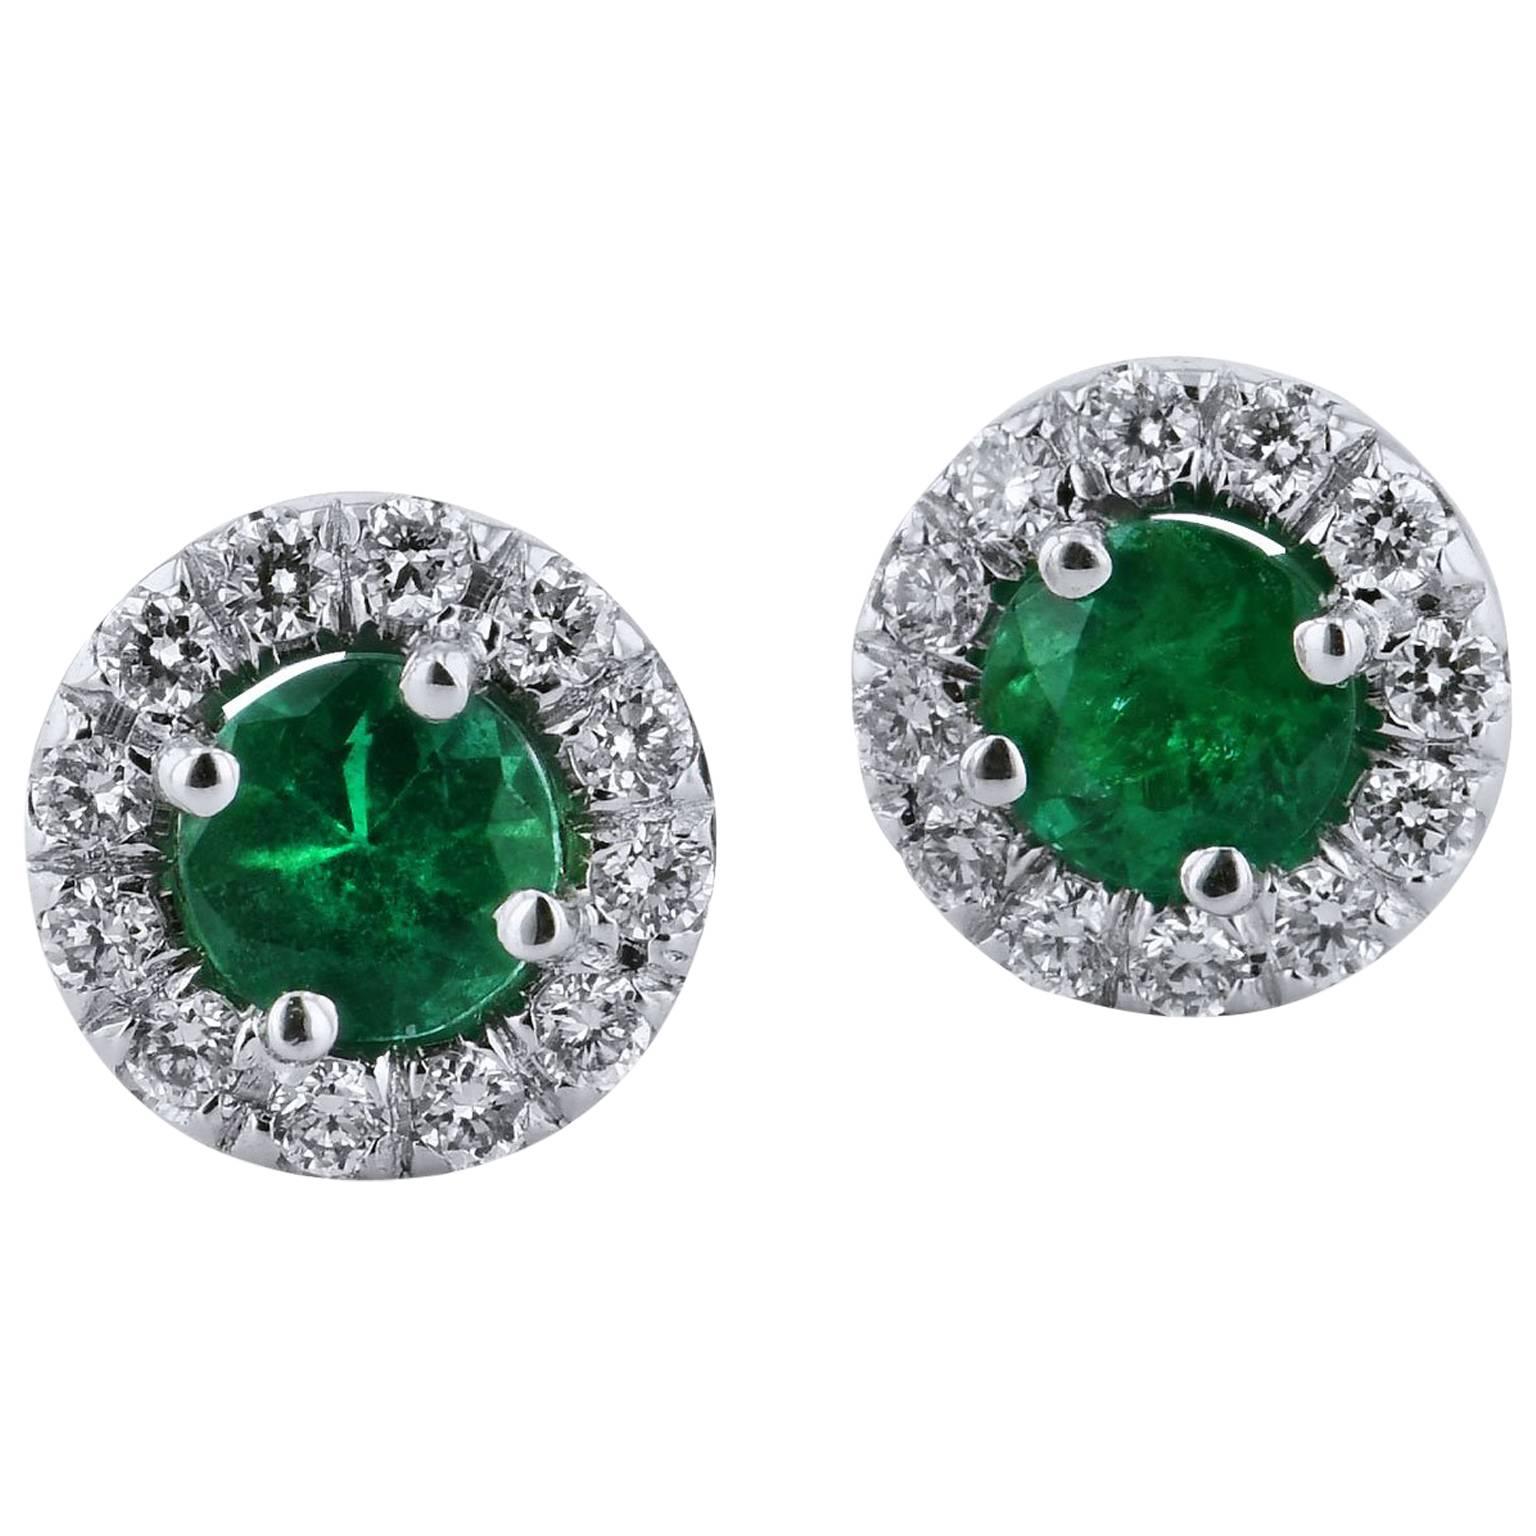 H & H 0.34 Carat Emerald Stud Earrings